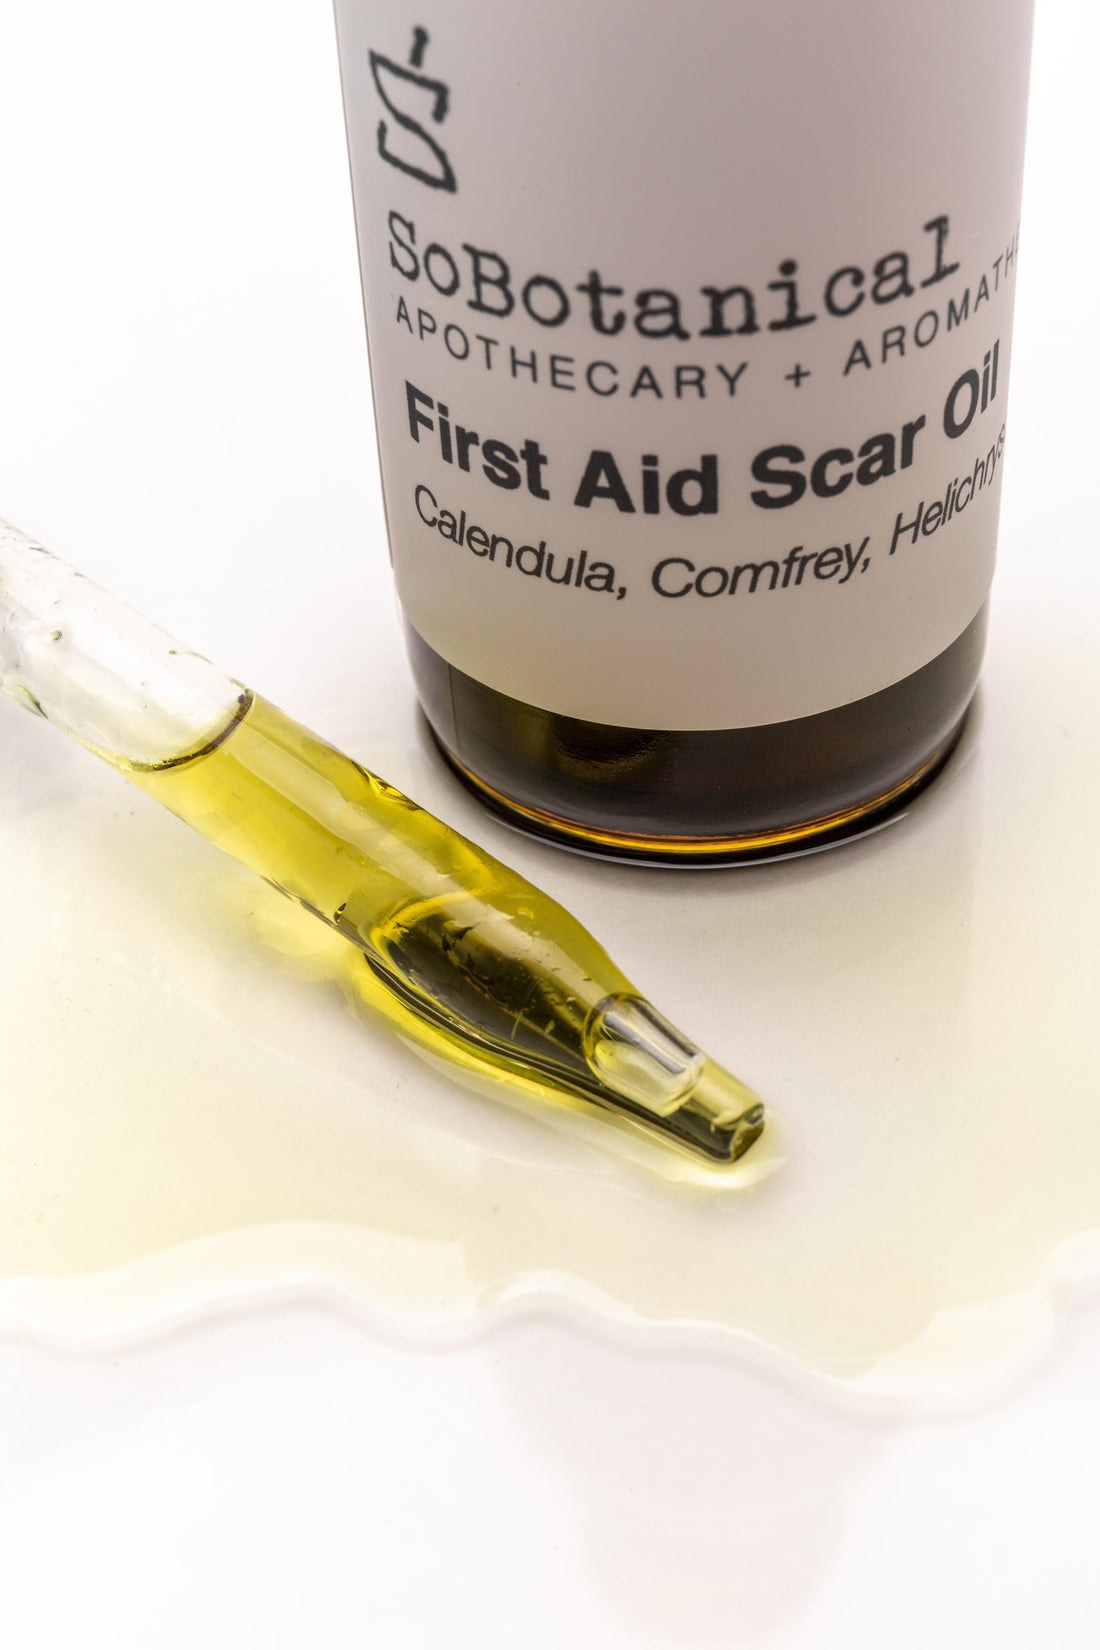 First Aid Scar Oil